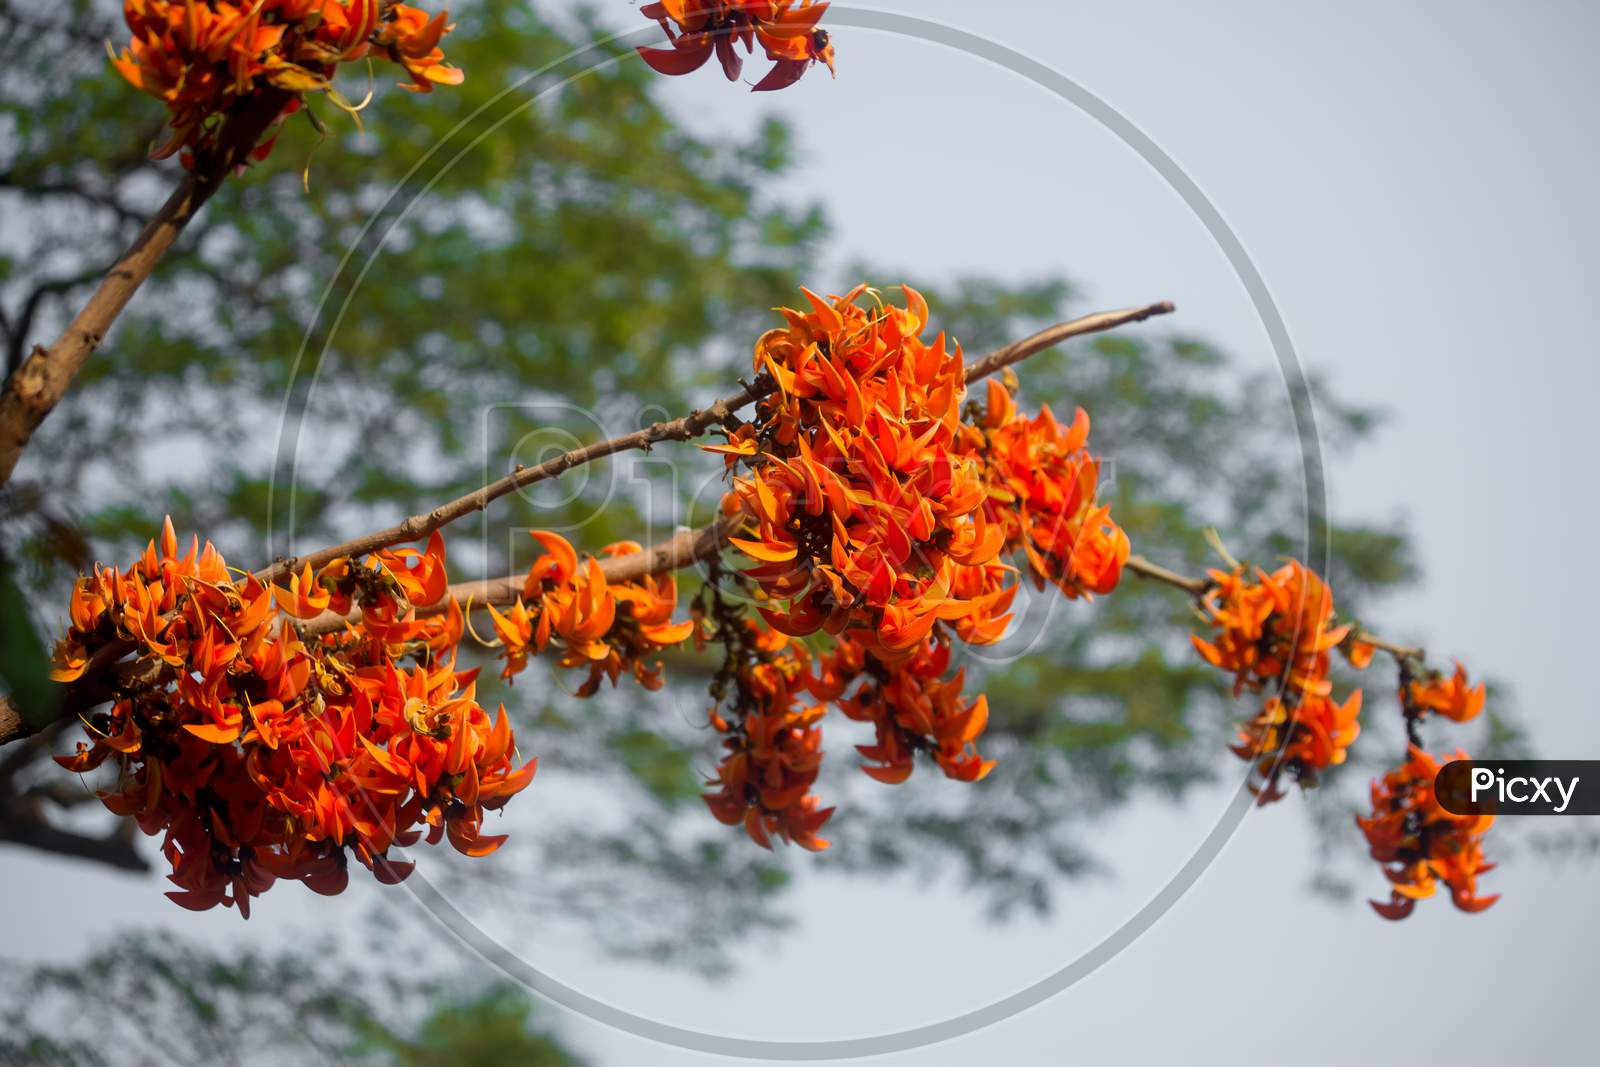 The Beautiful Reddish-Orange Butea Monosperma Flower Blooms In Nature In A Tree In The Garden.